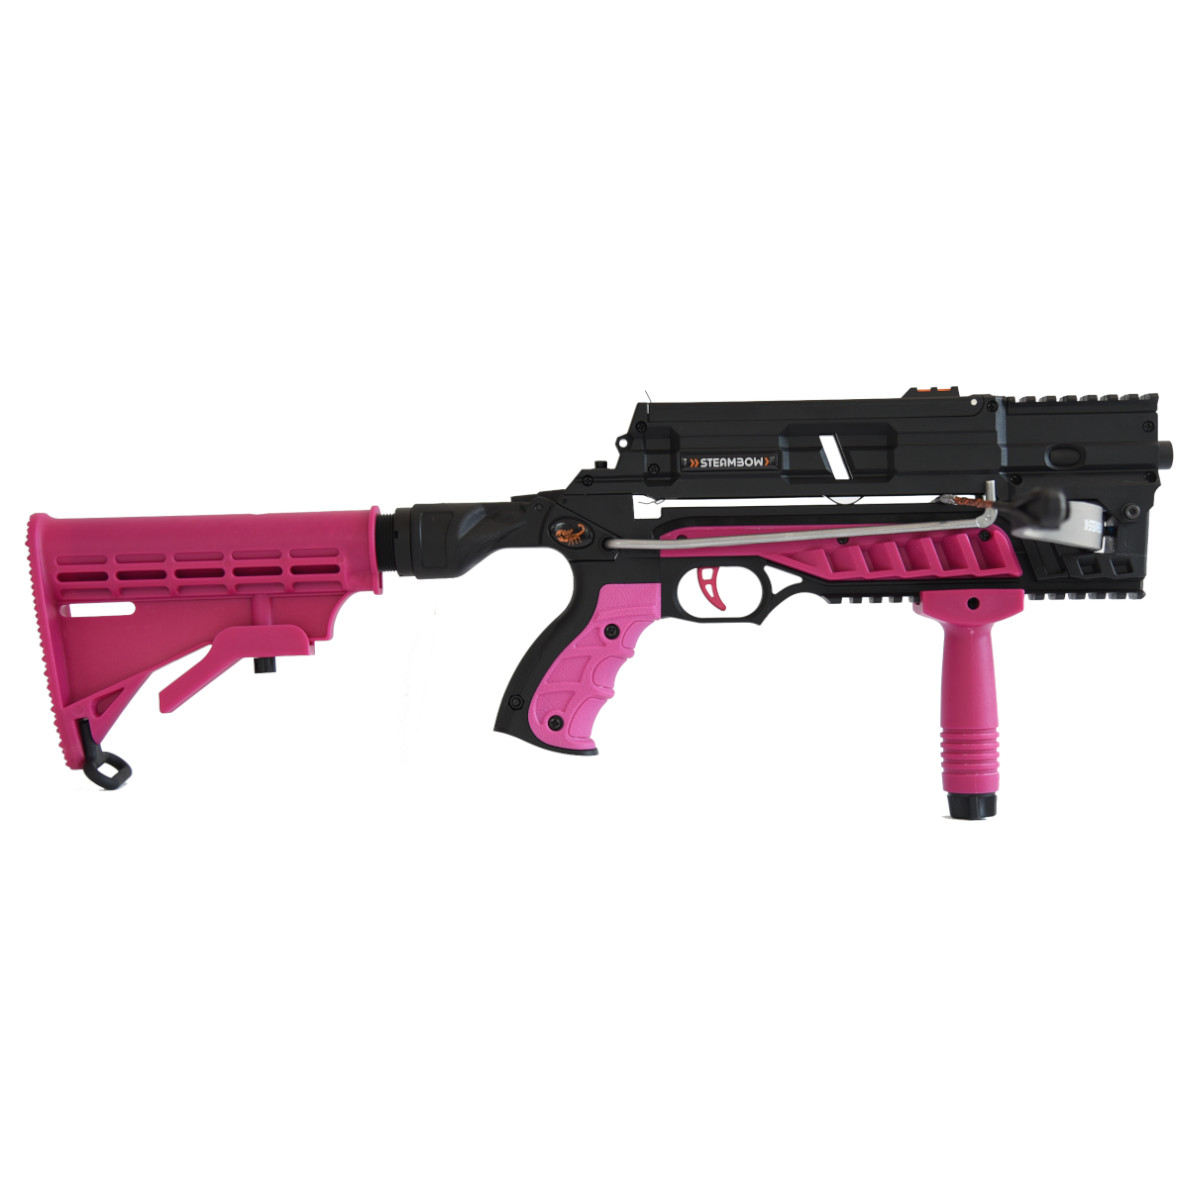 Stinger II Customizing Kit, Pink